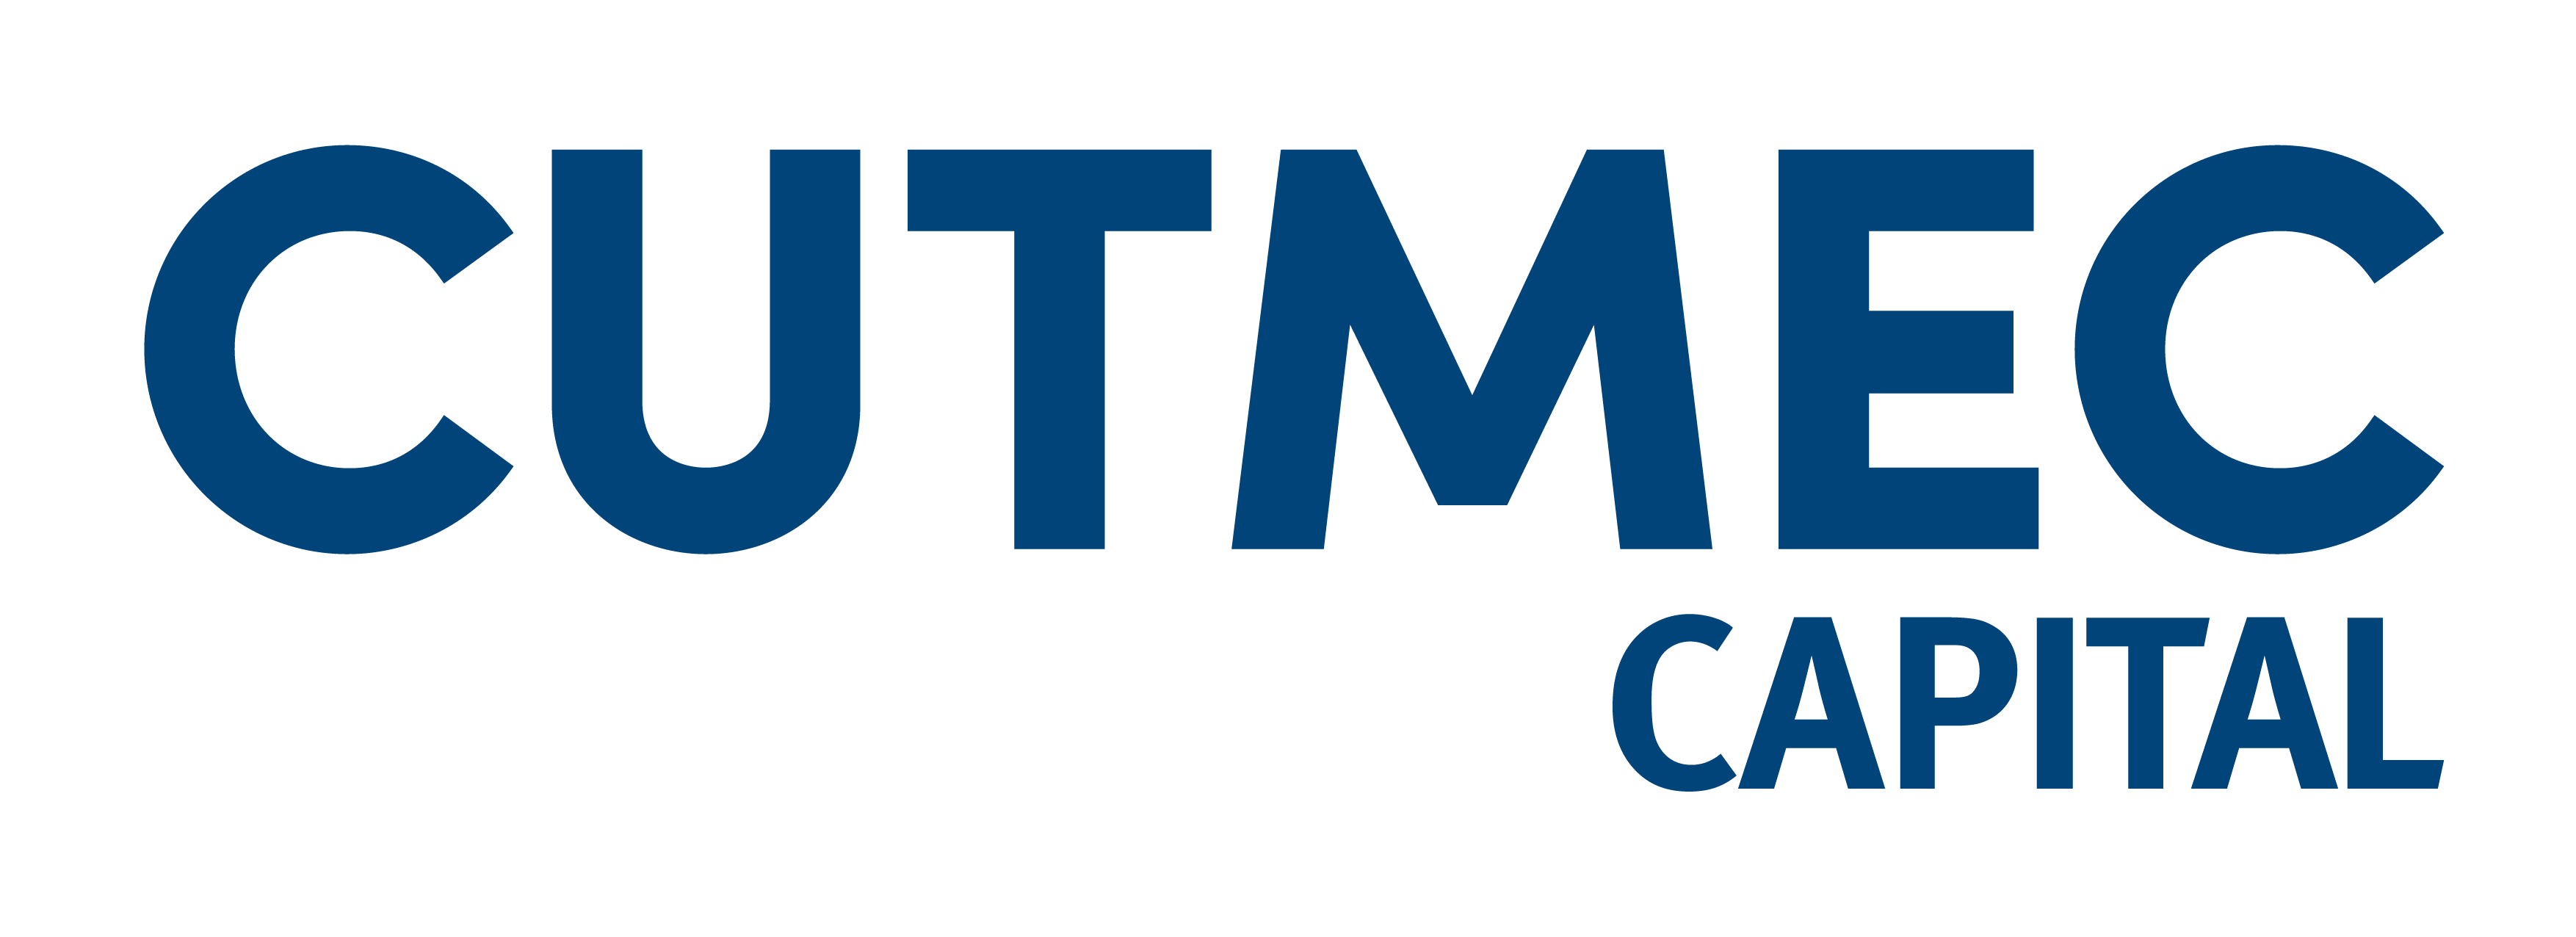 CUTMEC Capital logo in blue